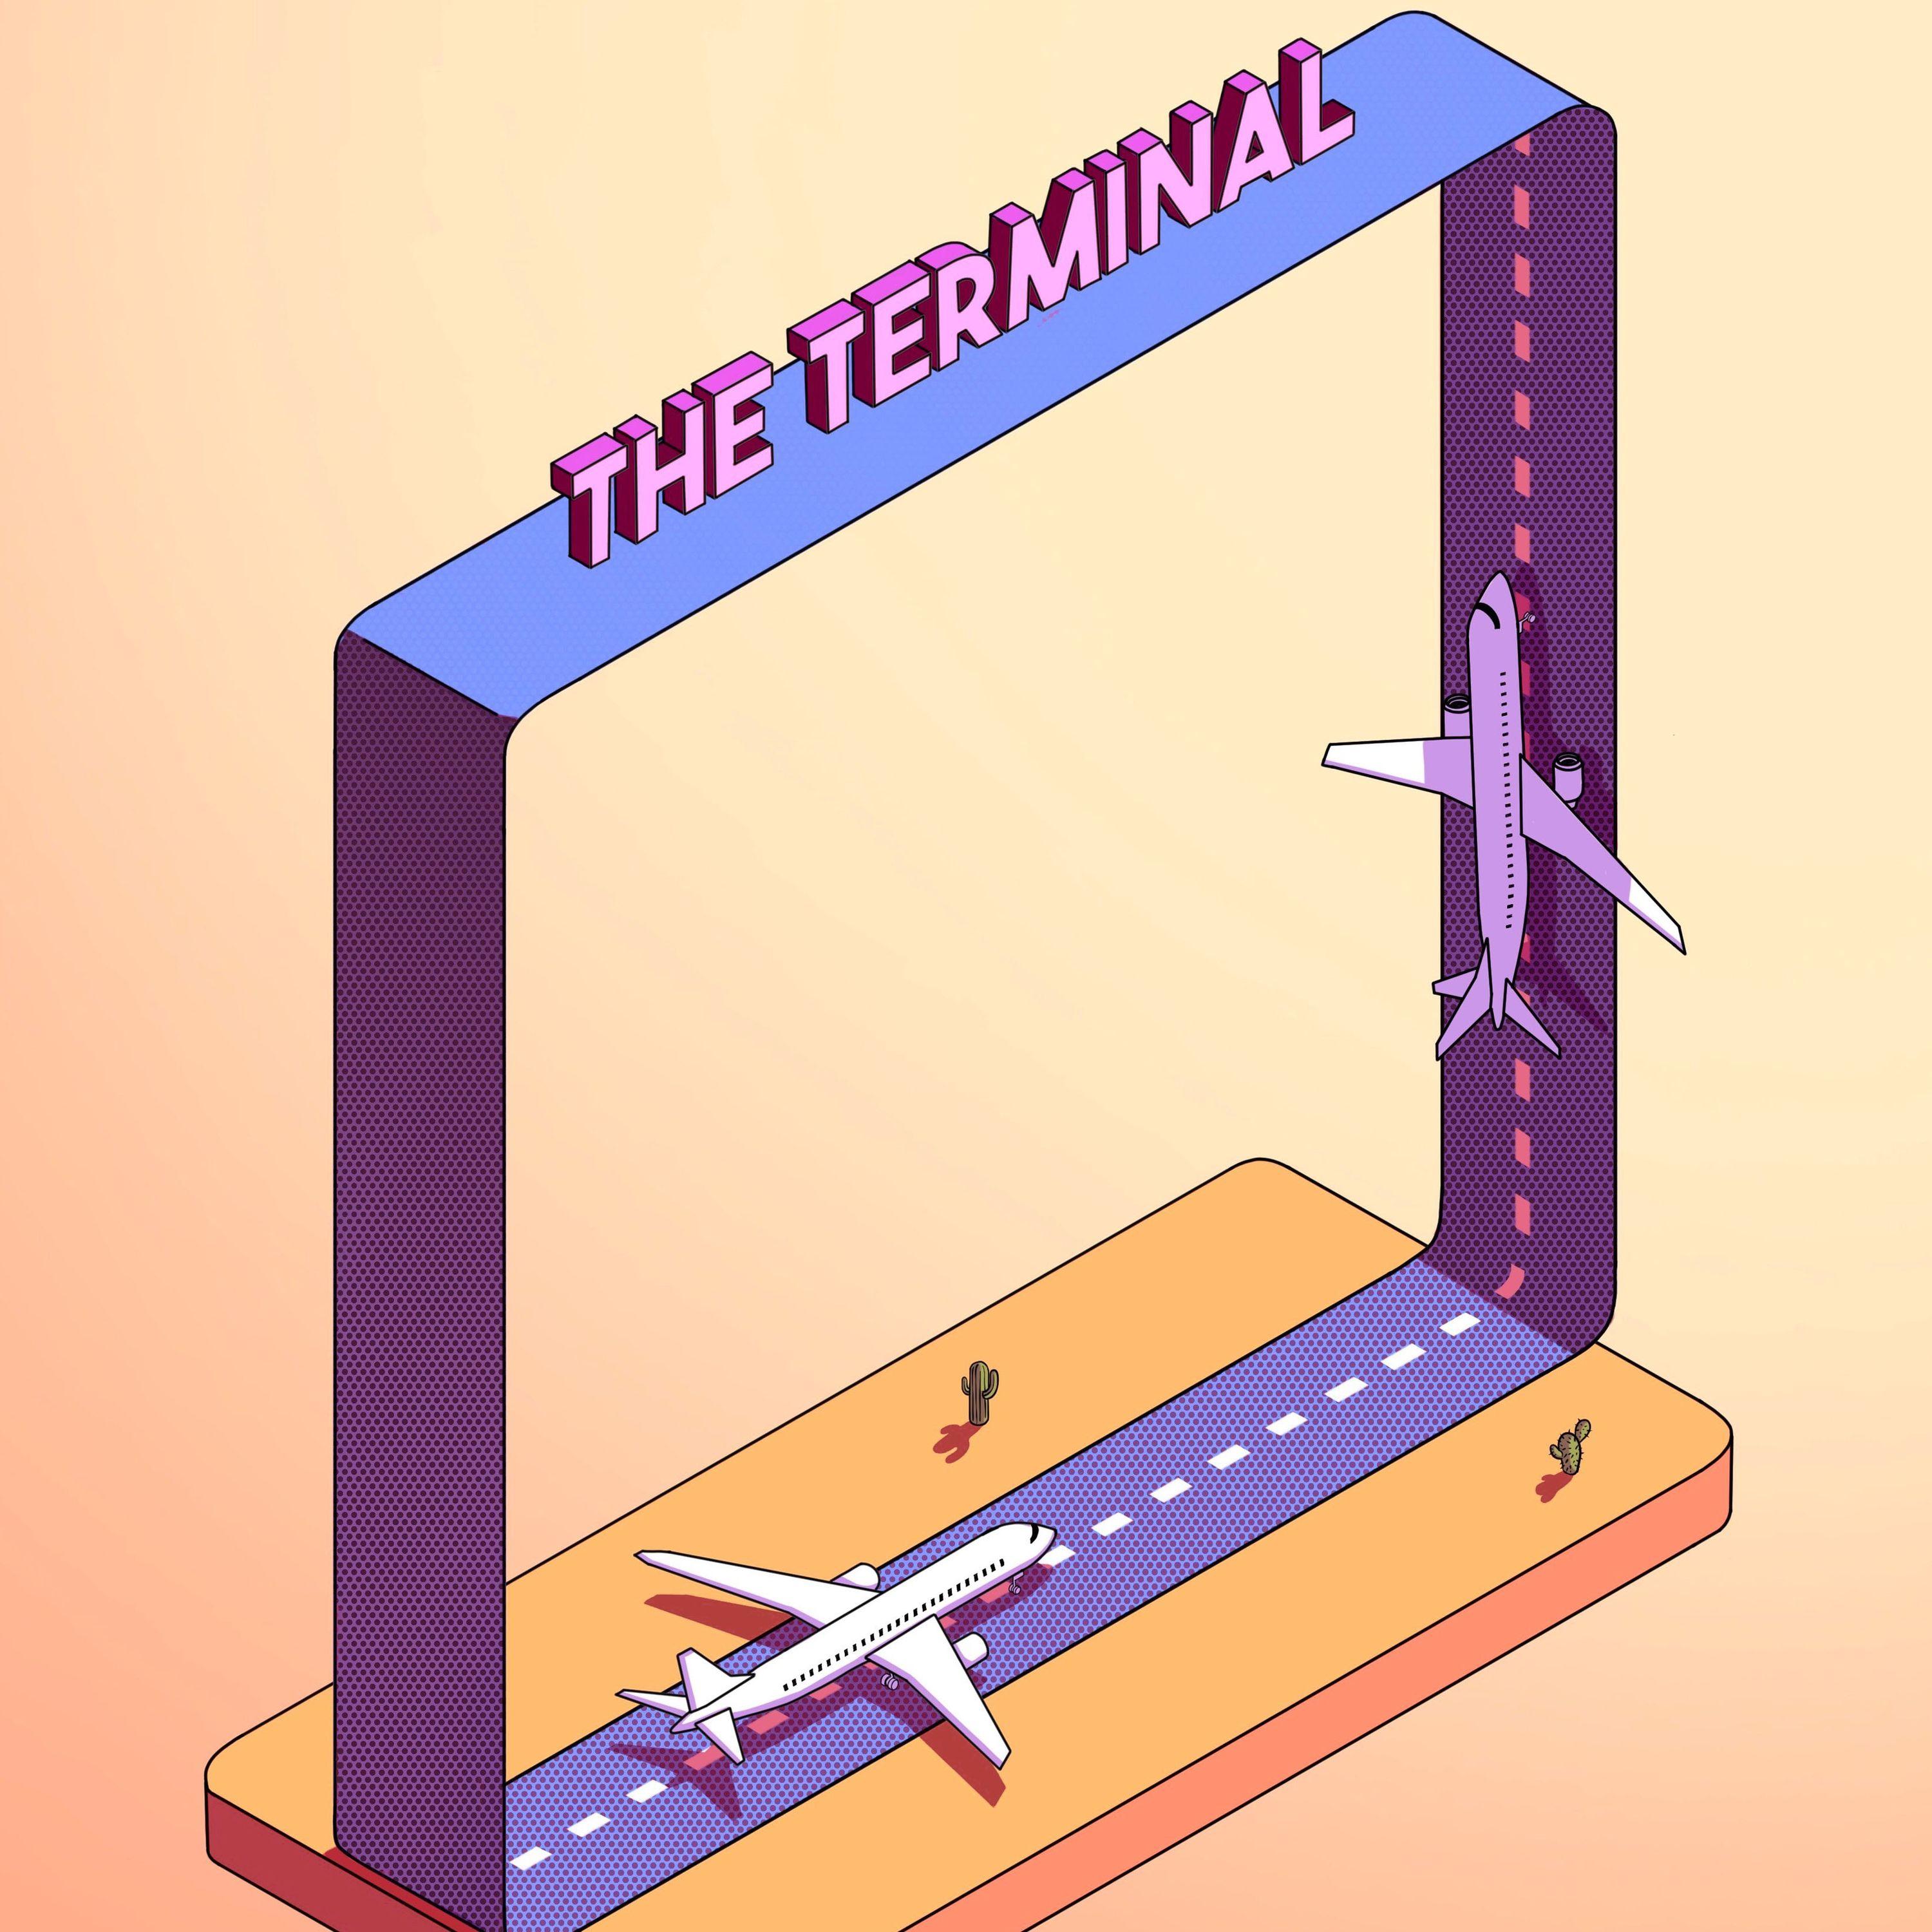 Thumbnail for "231 - The Terminal".